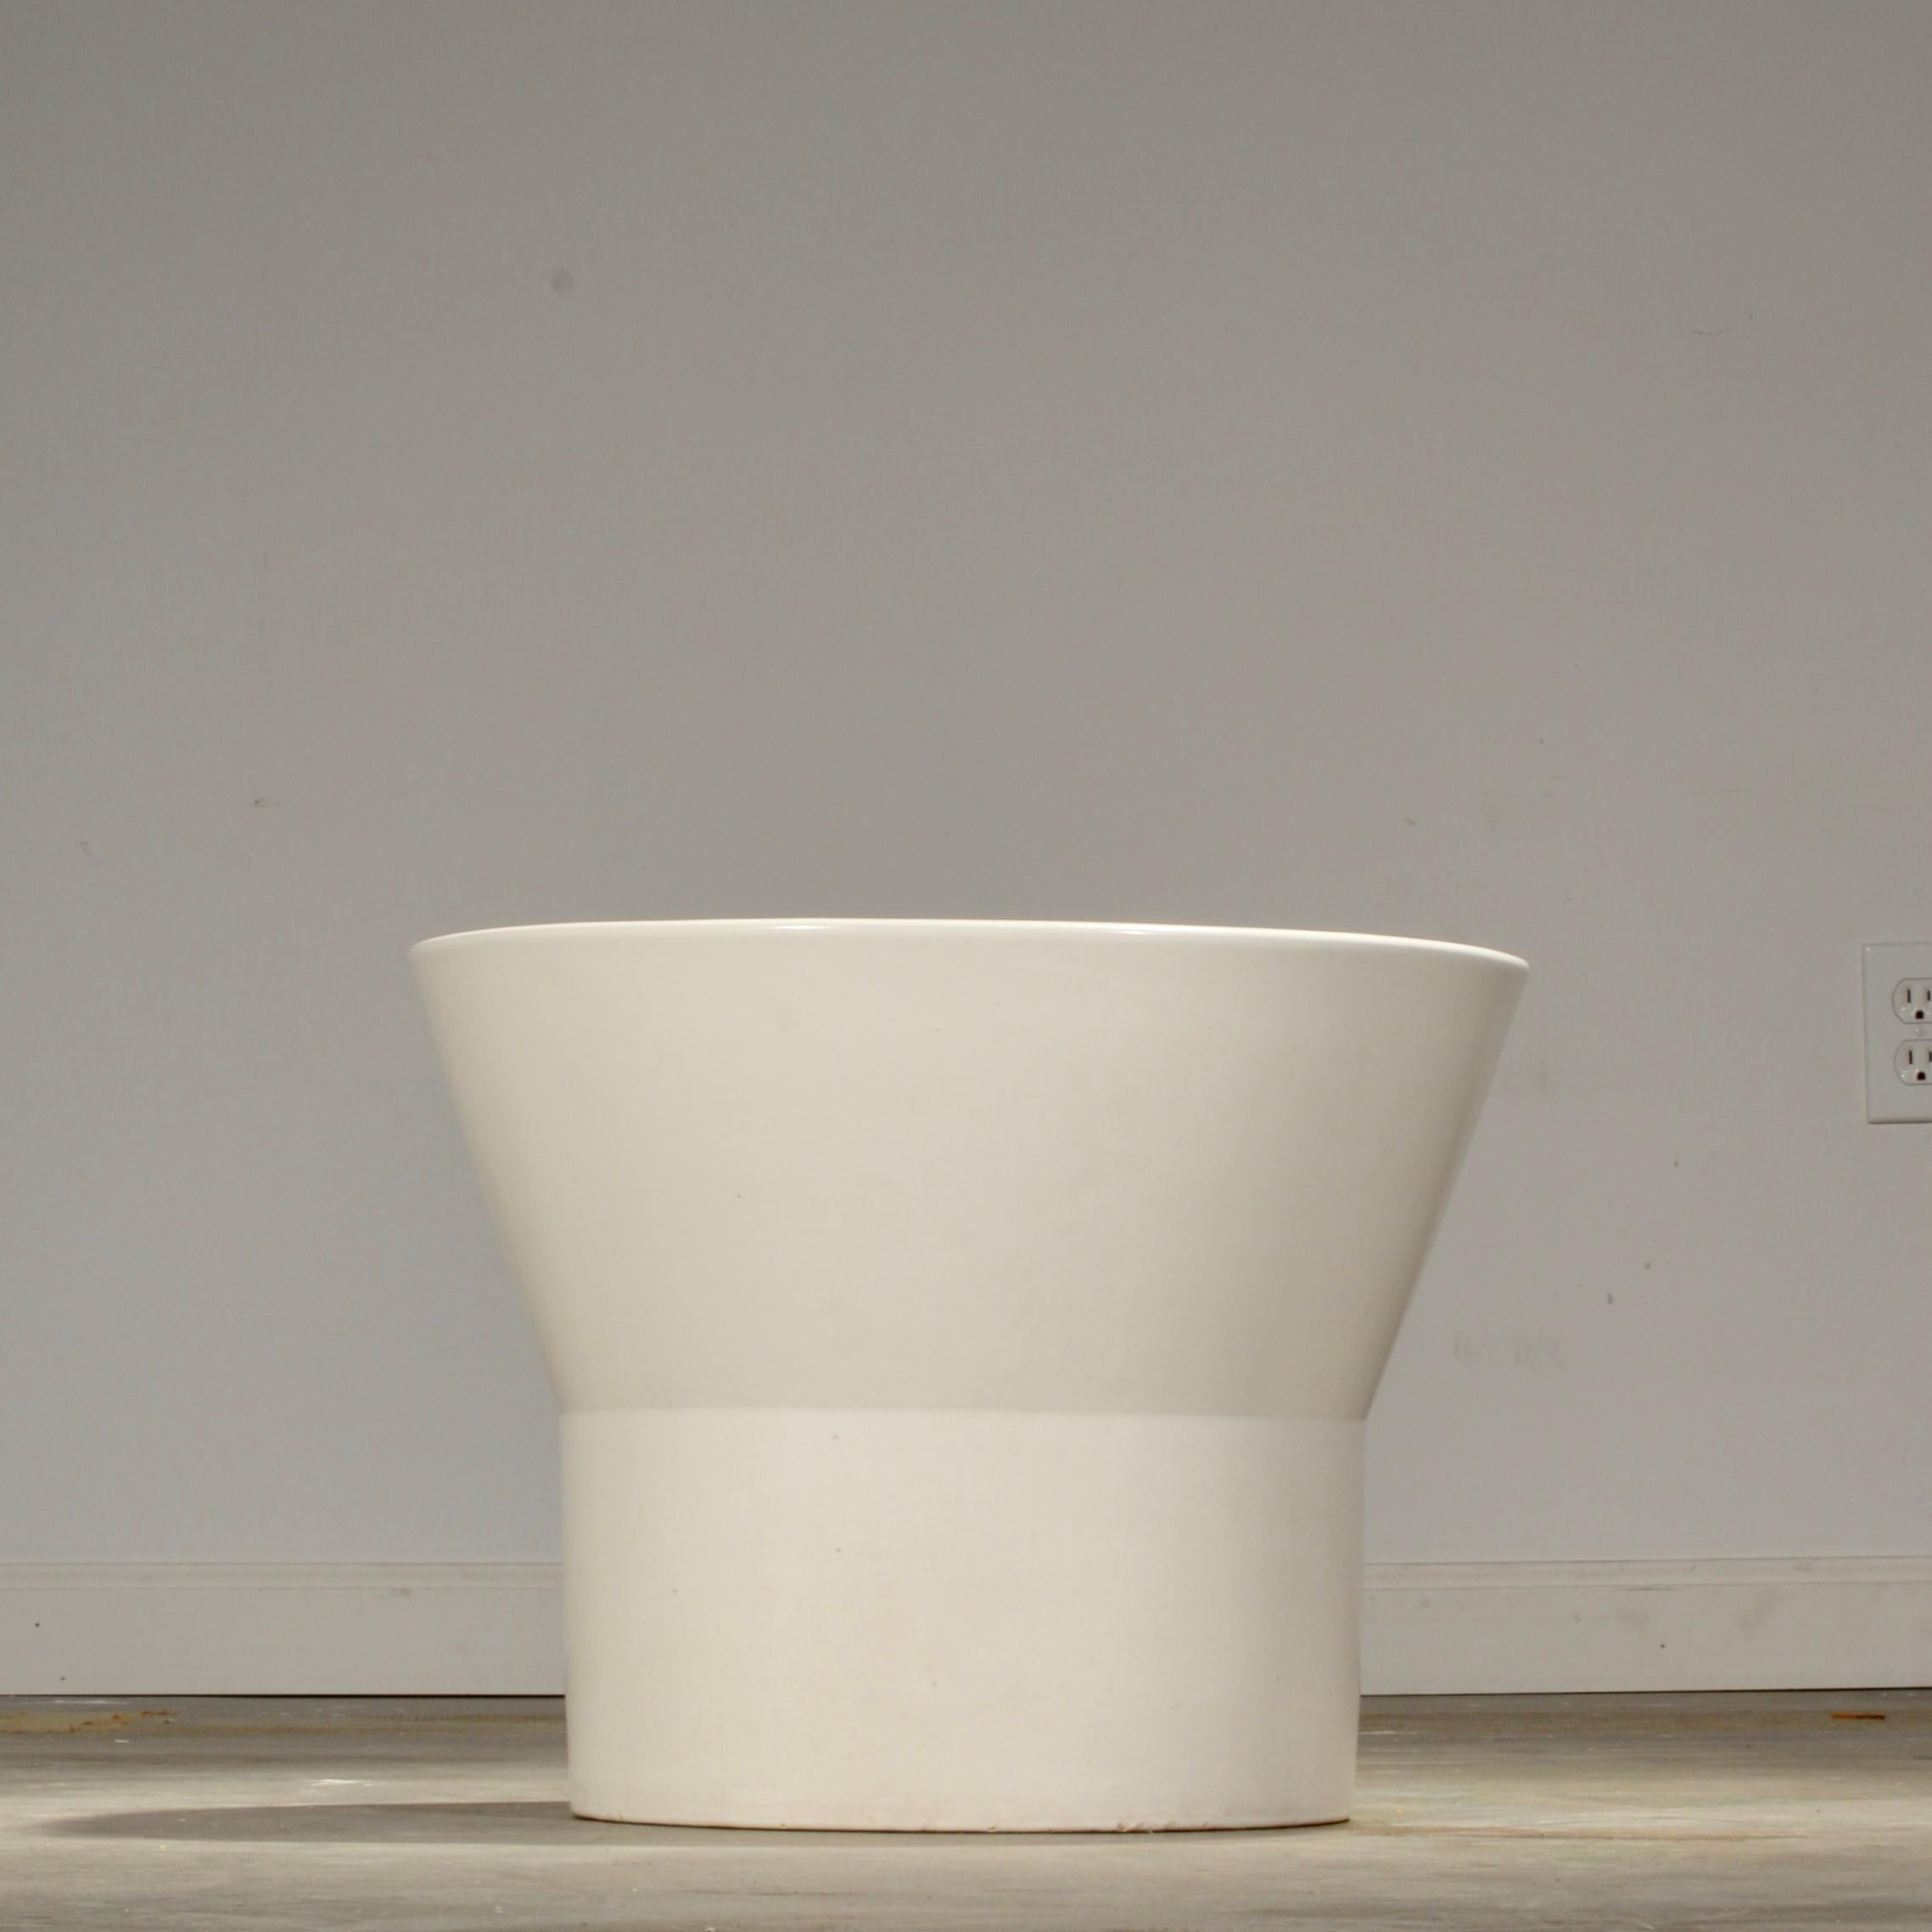 Ceramic Paul Mccobb for Architectural Pottery White M-2 Planter, 1964 For Sale